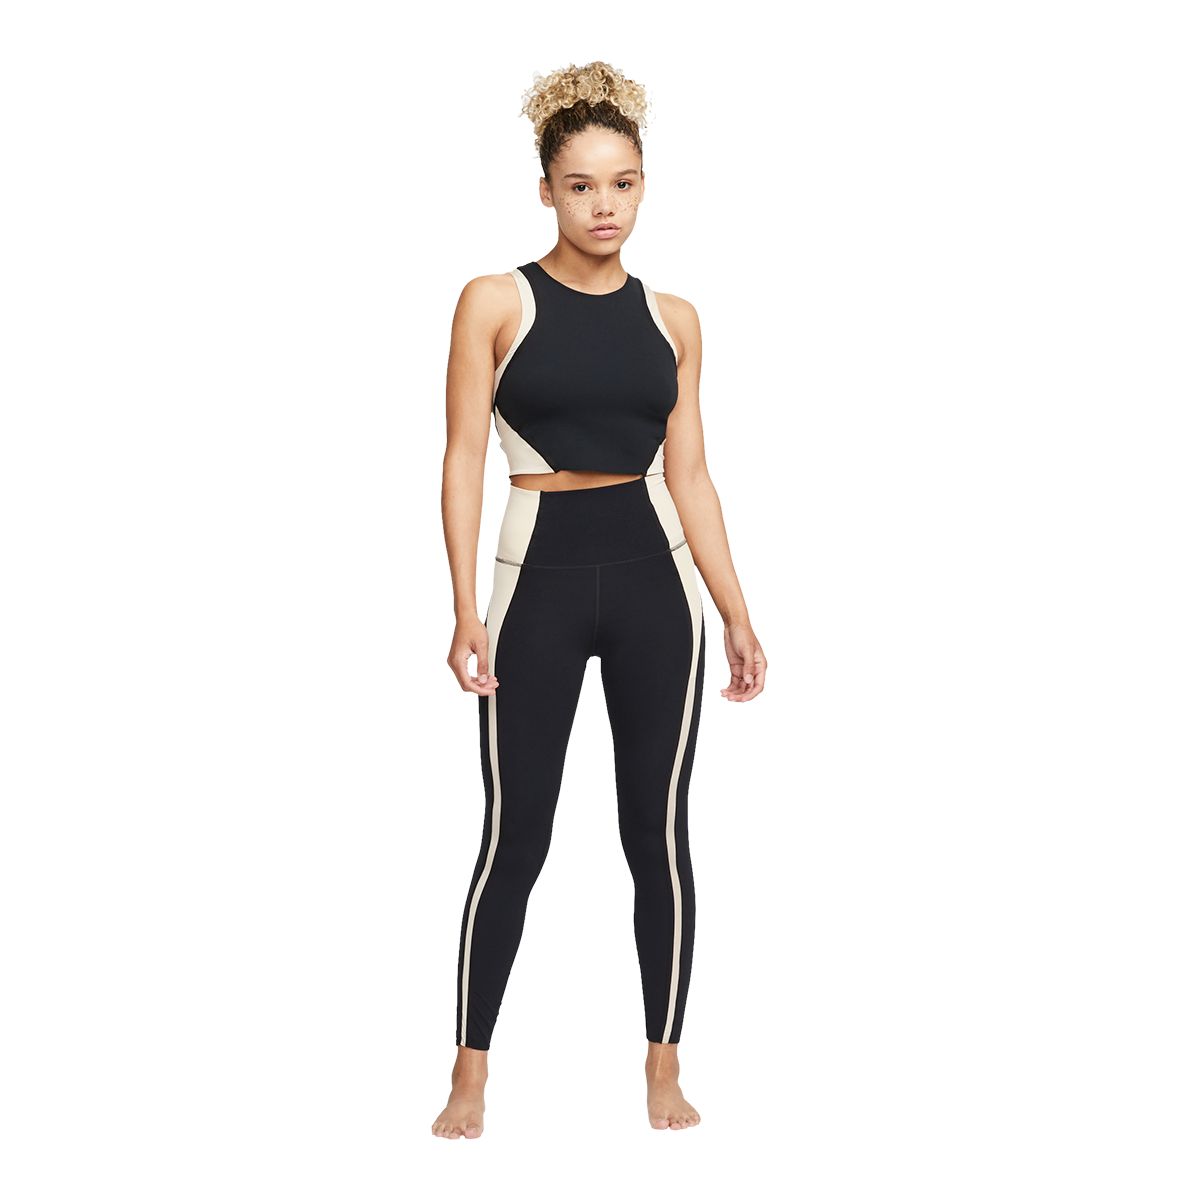 Nike Yoga luxe crop top in black